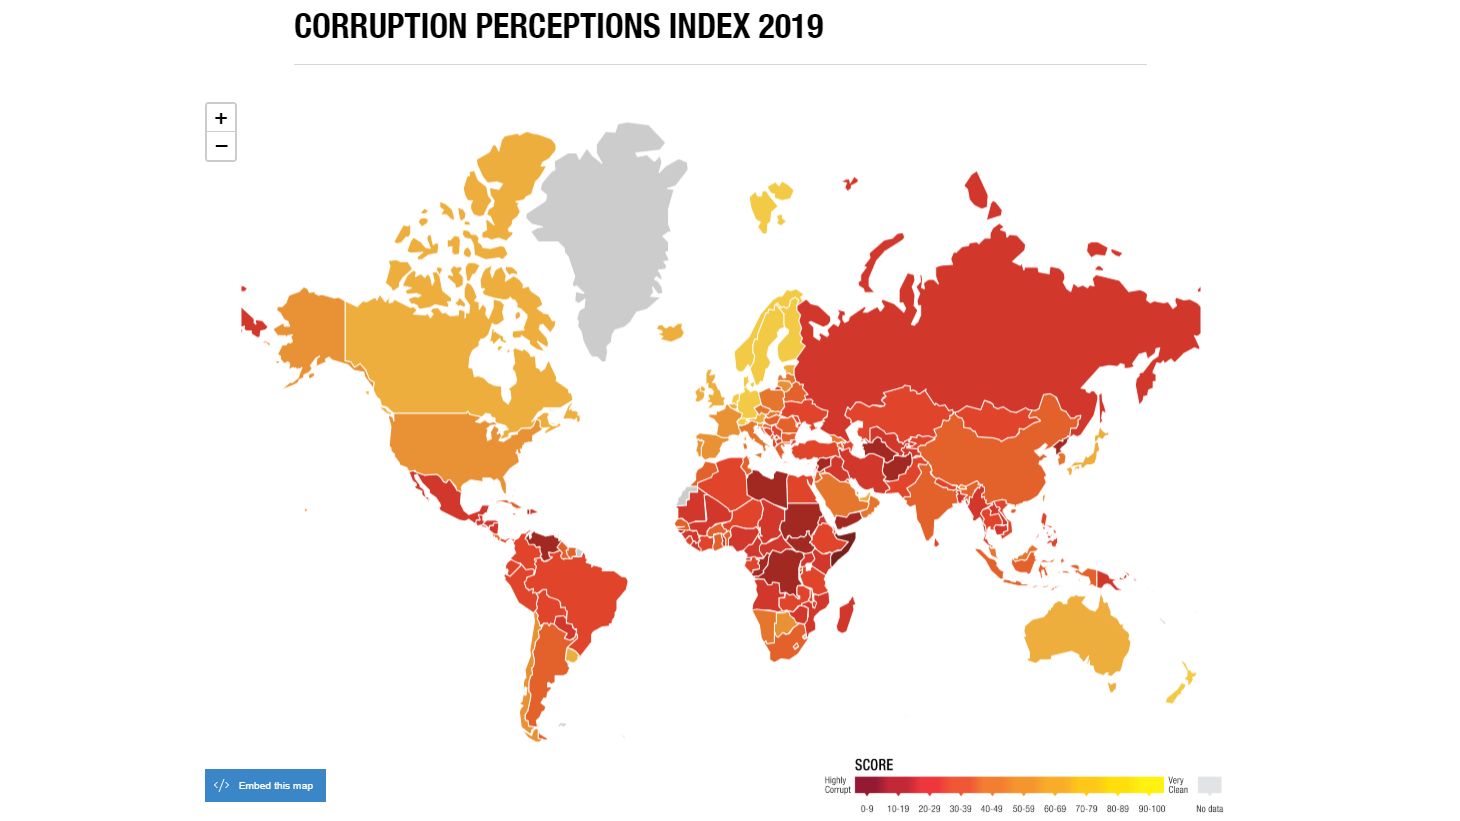 transparency international corruption perception index india slips 2 positions - Satya Hindi